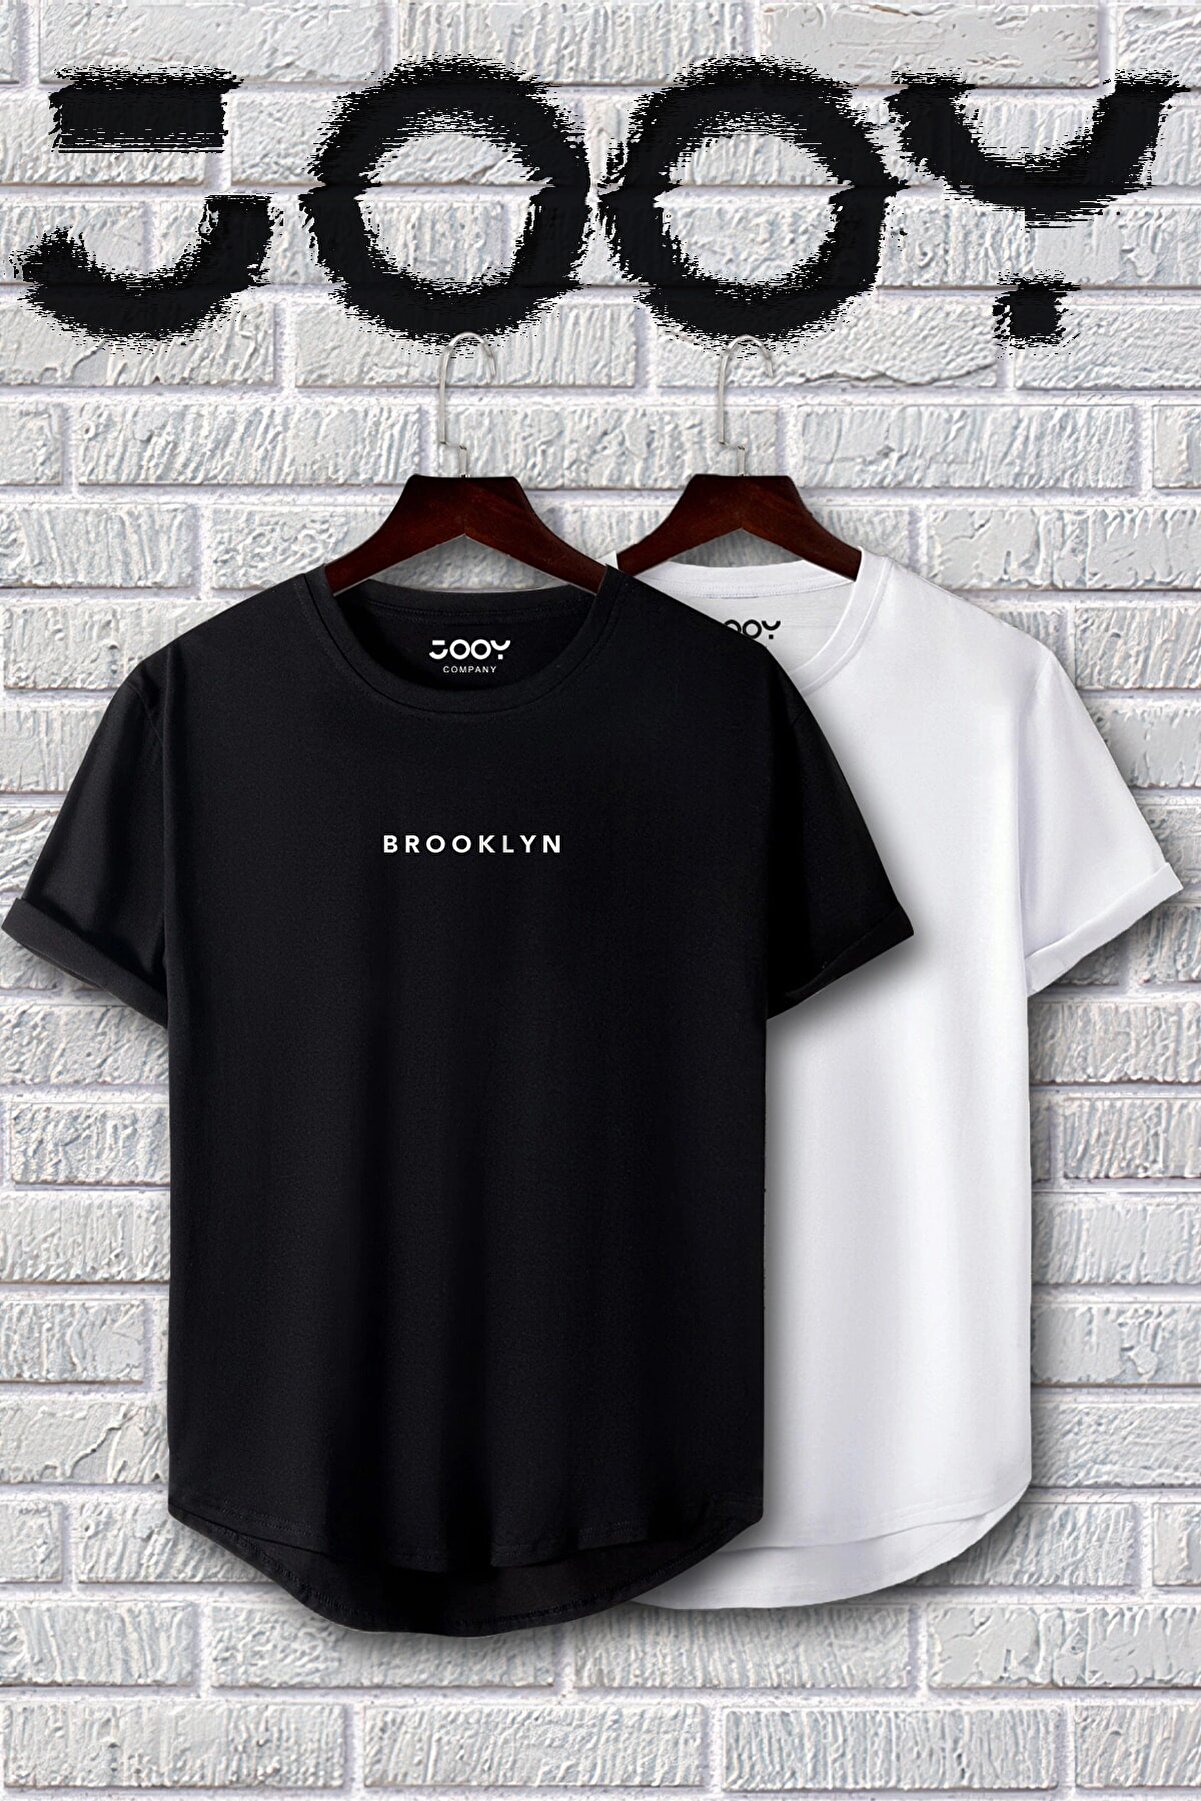 Jooy Company Brooklyn Baskılı Siyah Beyaz Oval Kesim Tshirt 2'li Set